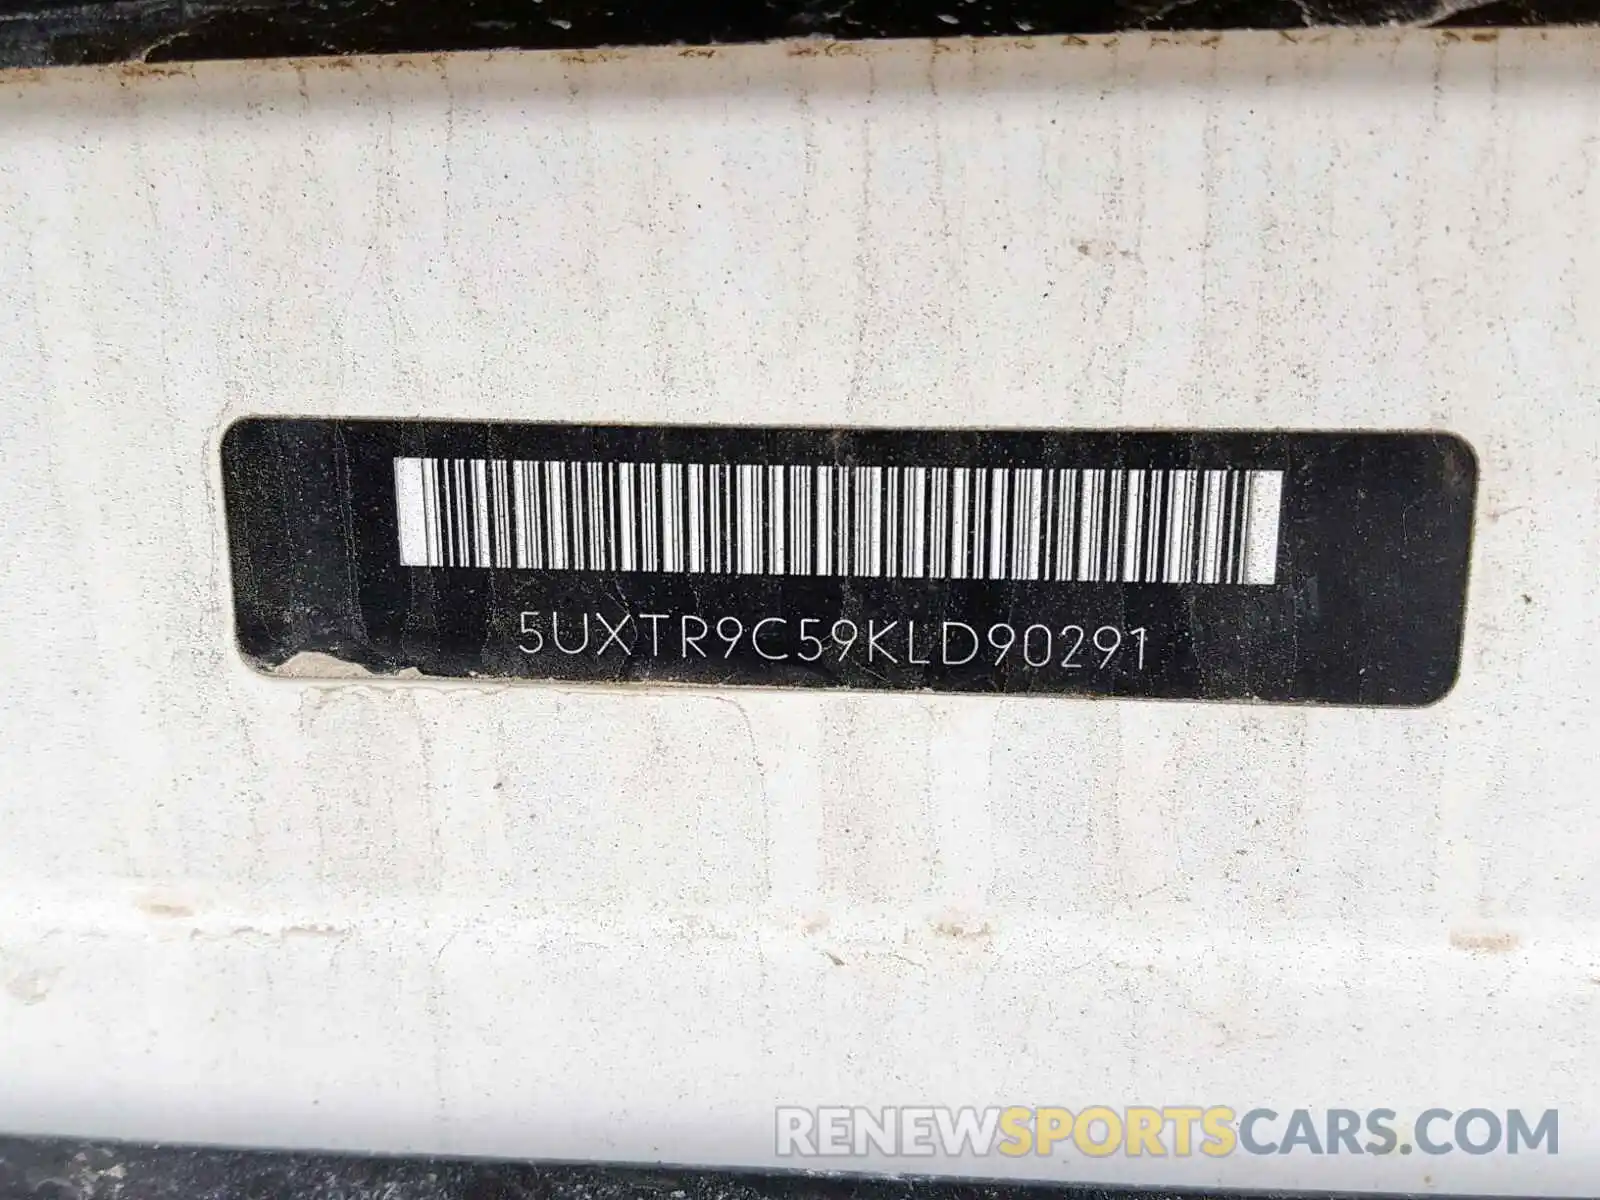 10 Photograph of a damaged car 5UXTR9C59KLD90291 BMW X3 2019